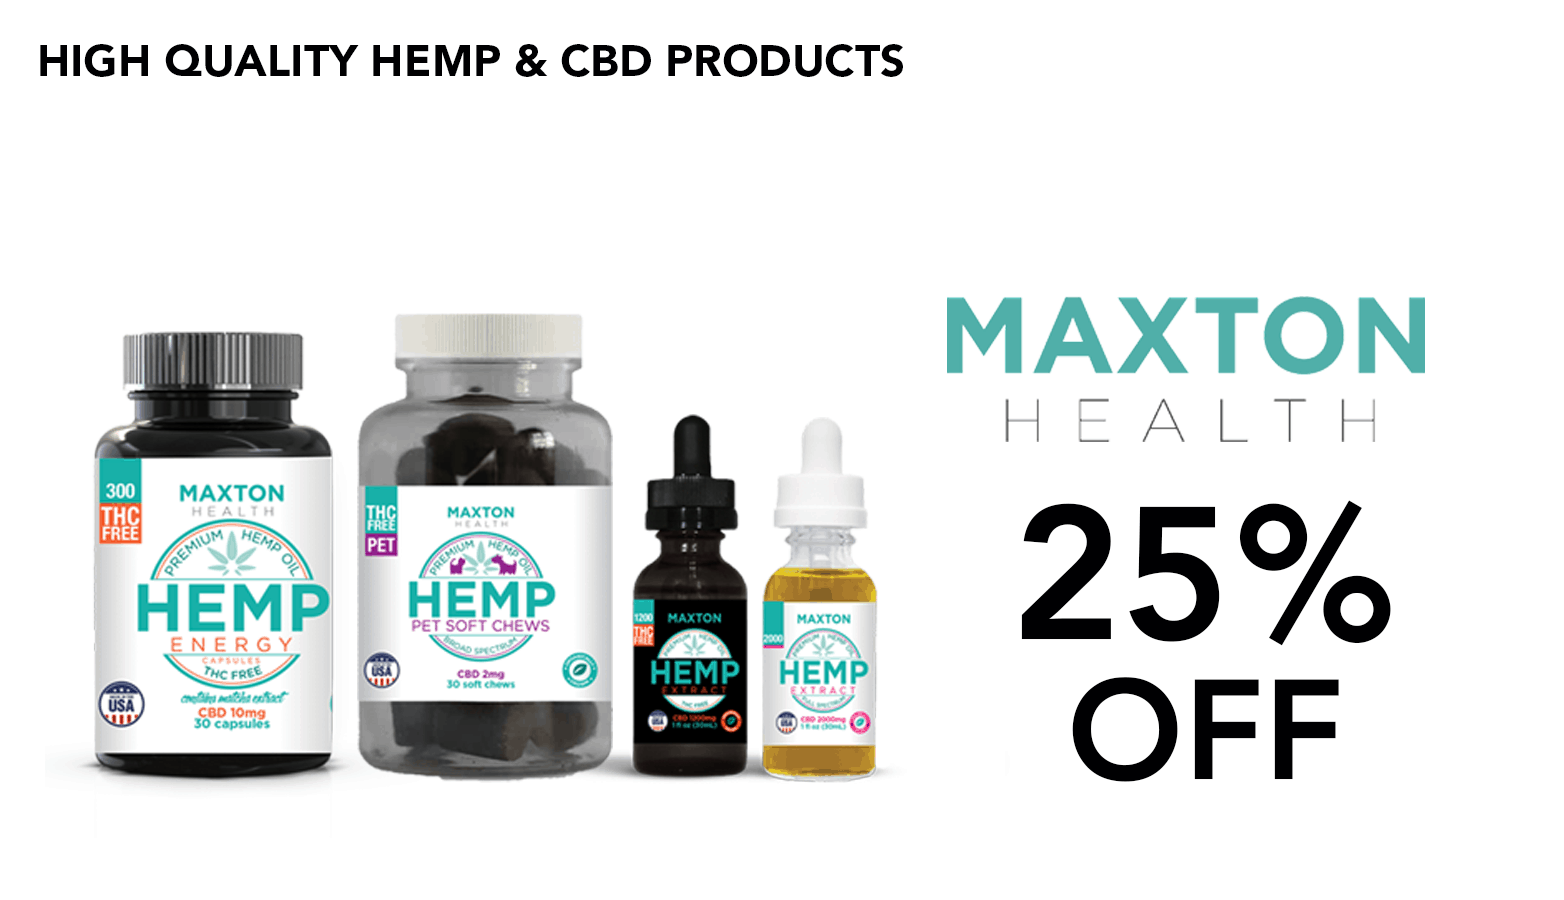 Maxton Health CBD CBD Coupon Code discounts promos save on cannabis online Website 25percent